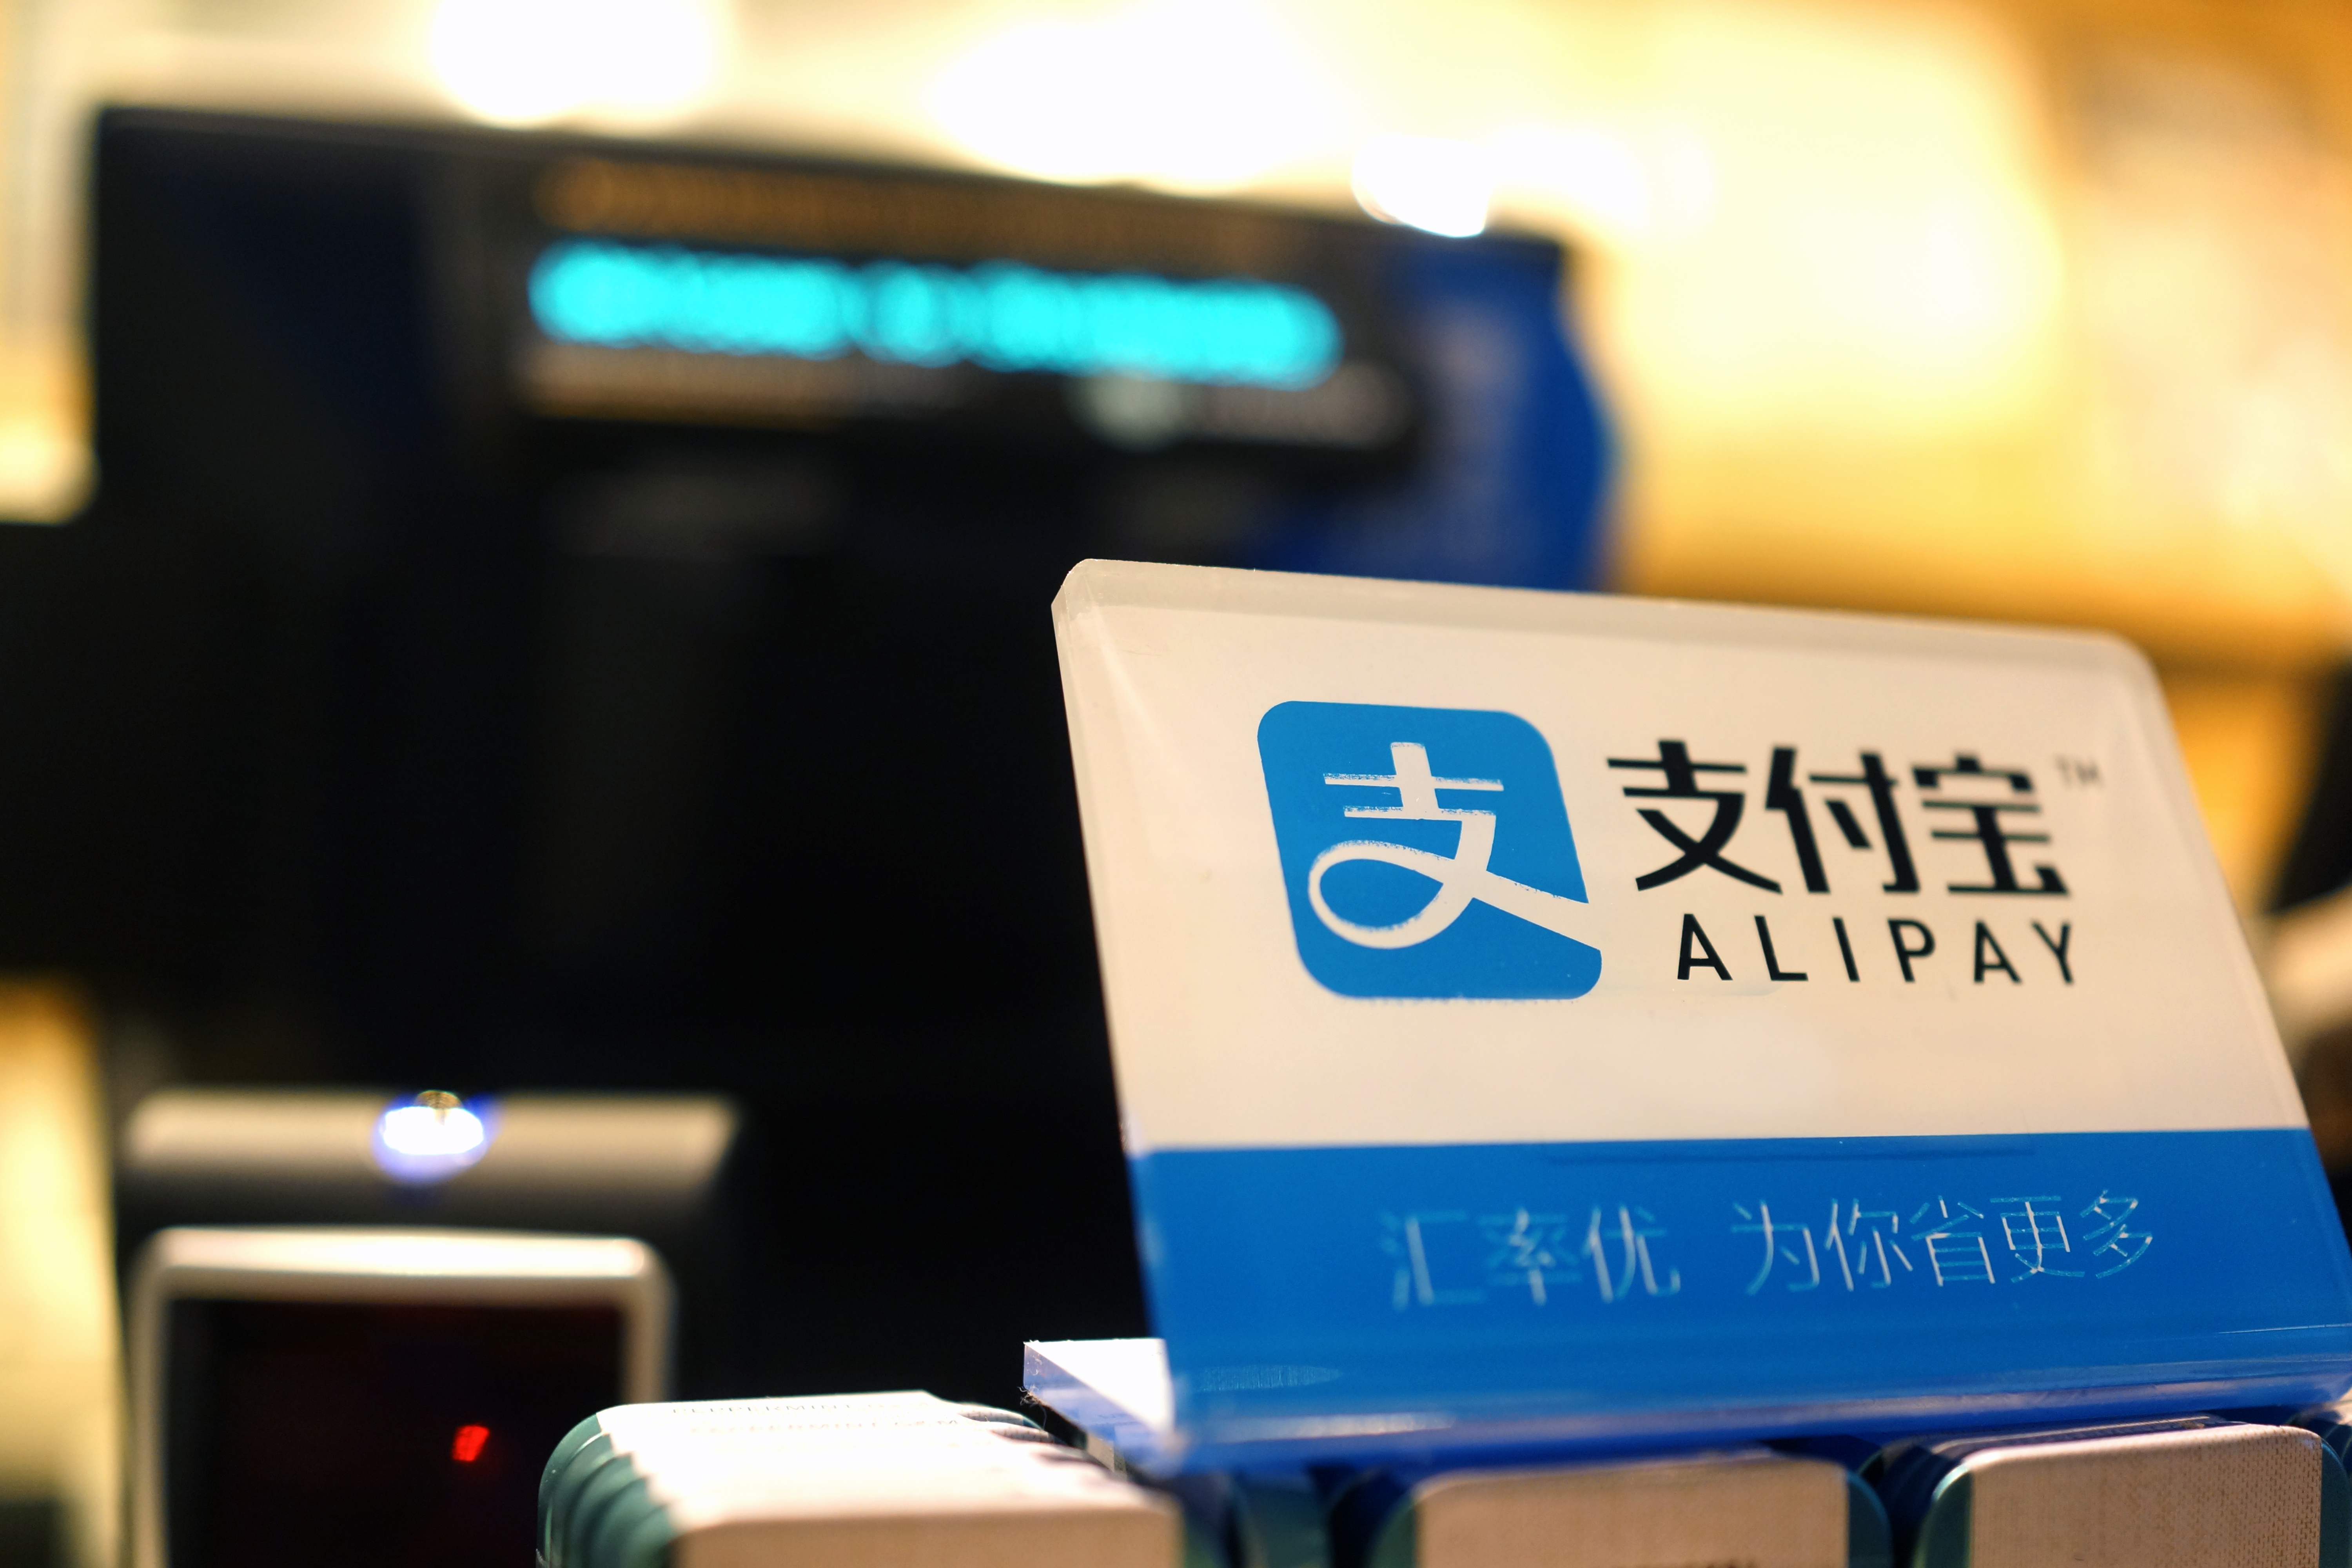 Alipay com. Alipay платежная система. Alipay логотип. Китайская платежная система. Китайских платежных систем Alipay.